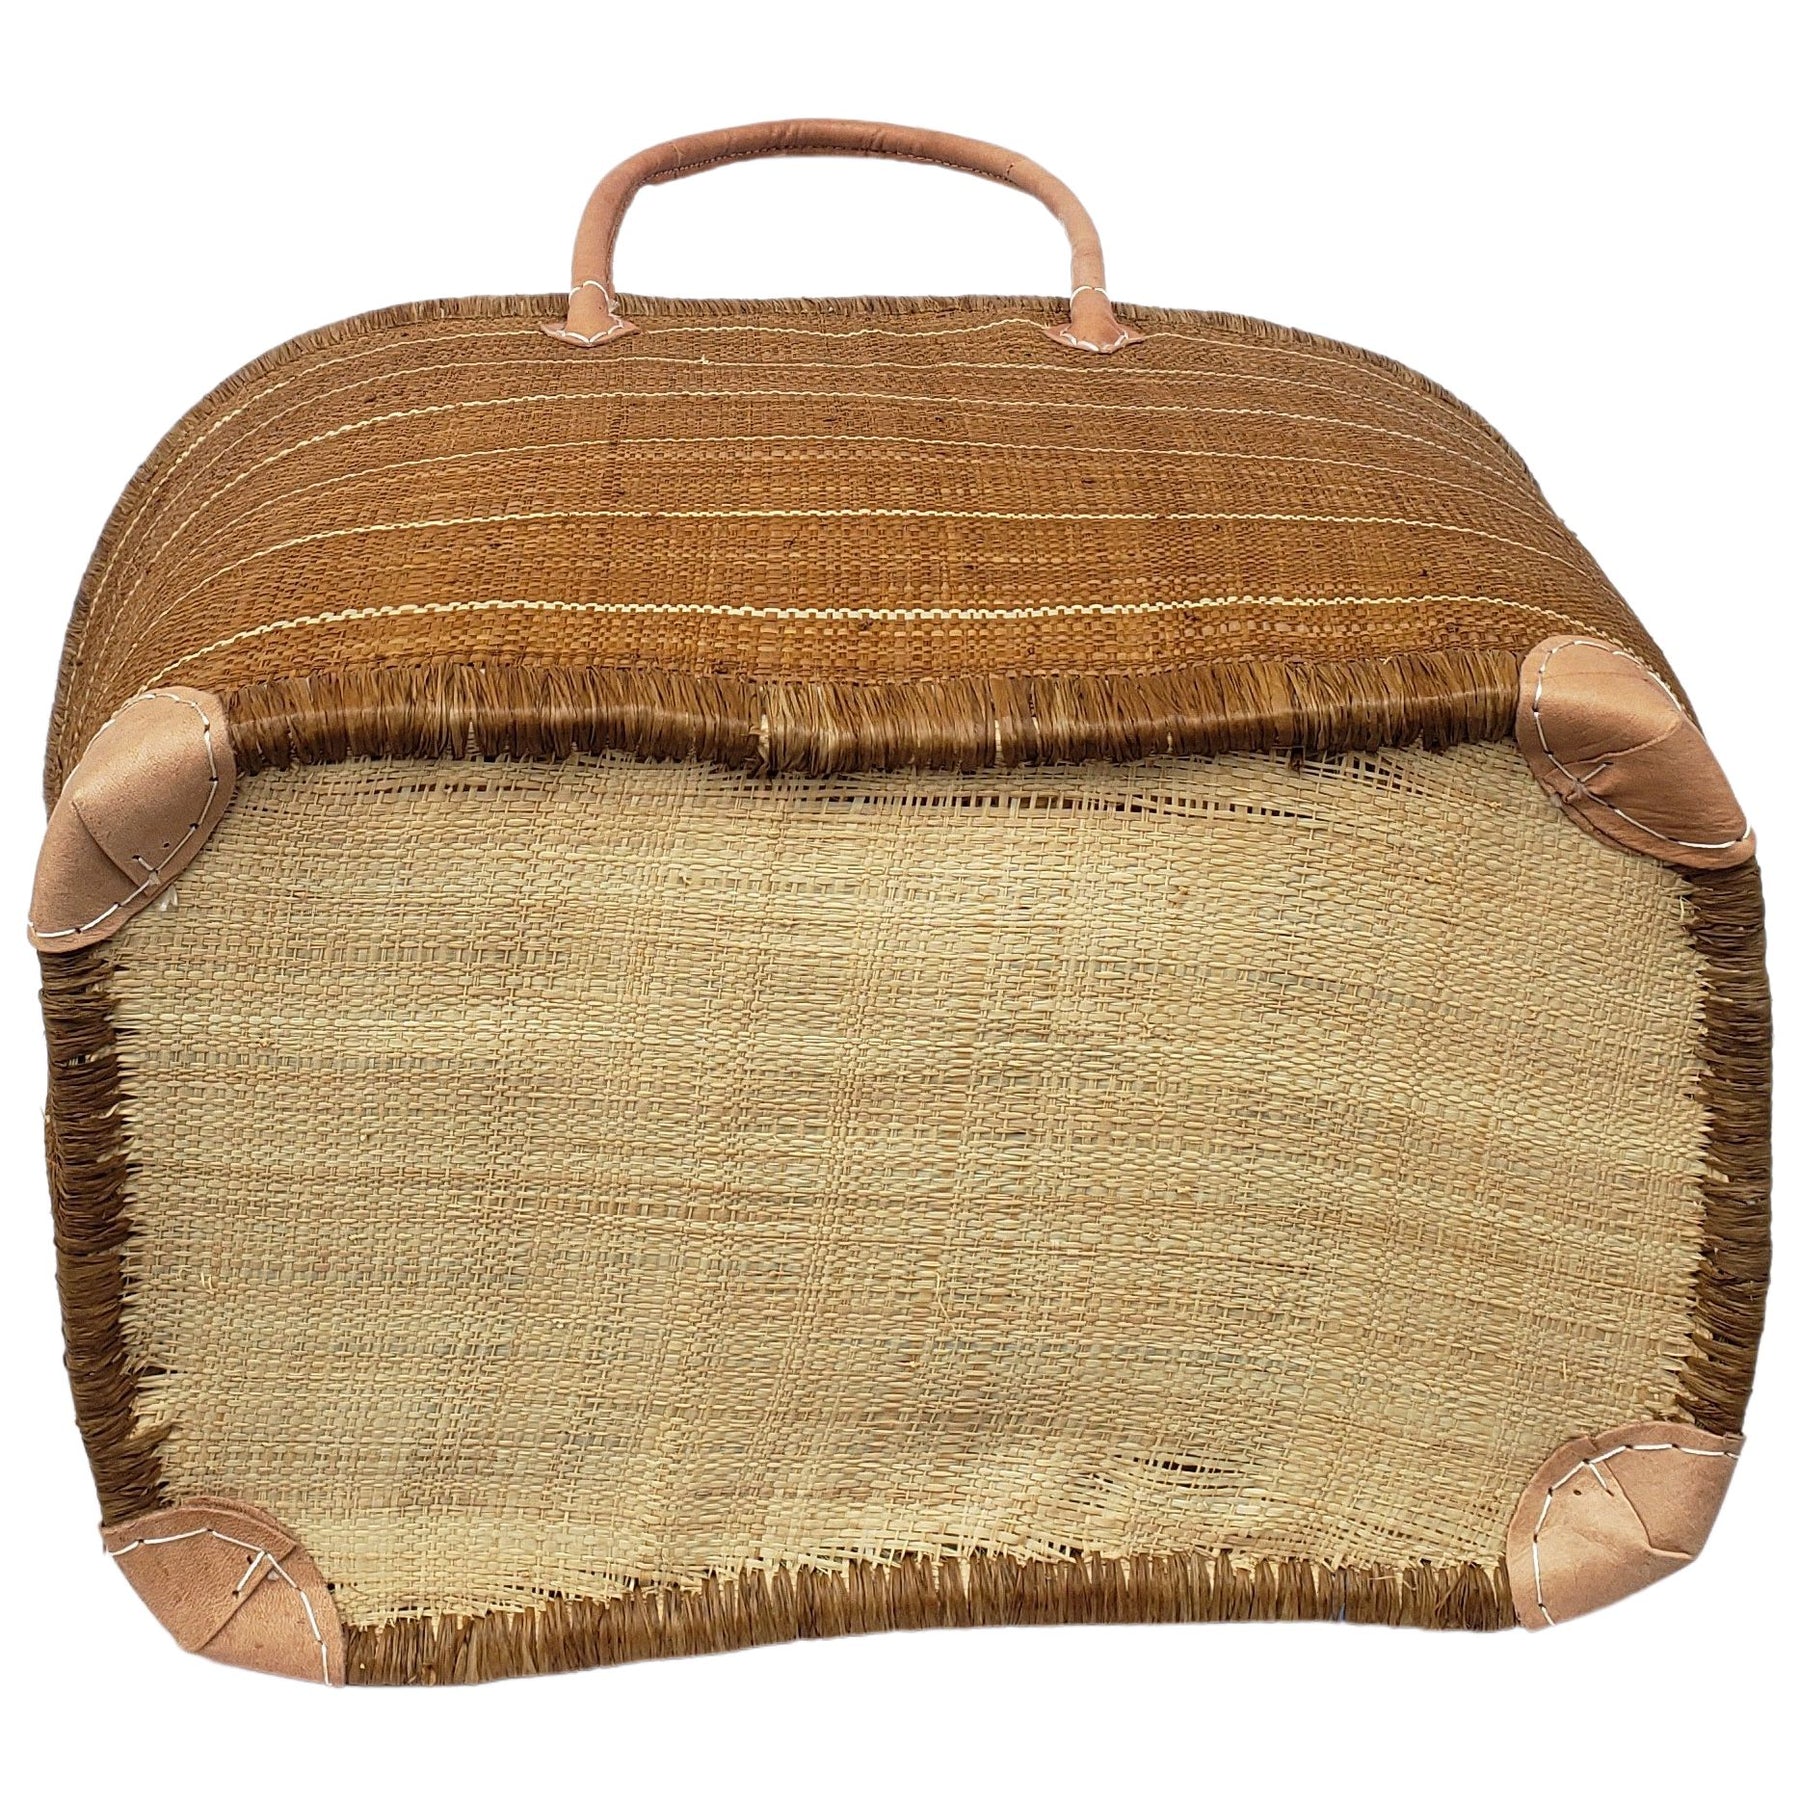 42 of 59: Adjanie: Authentic Madagascar Raffia and Leather Tote Bag (Brown Stripe)